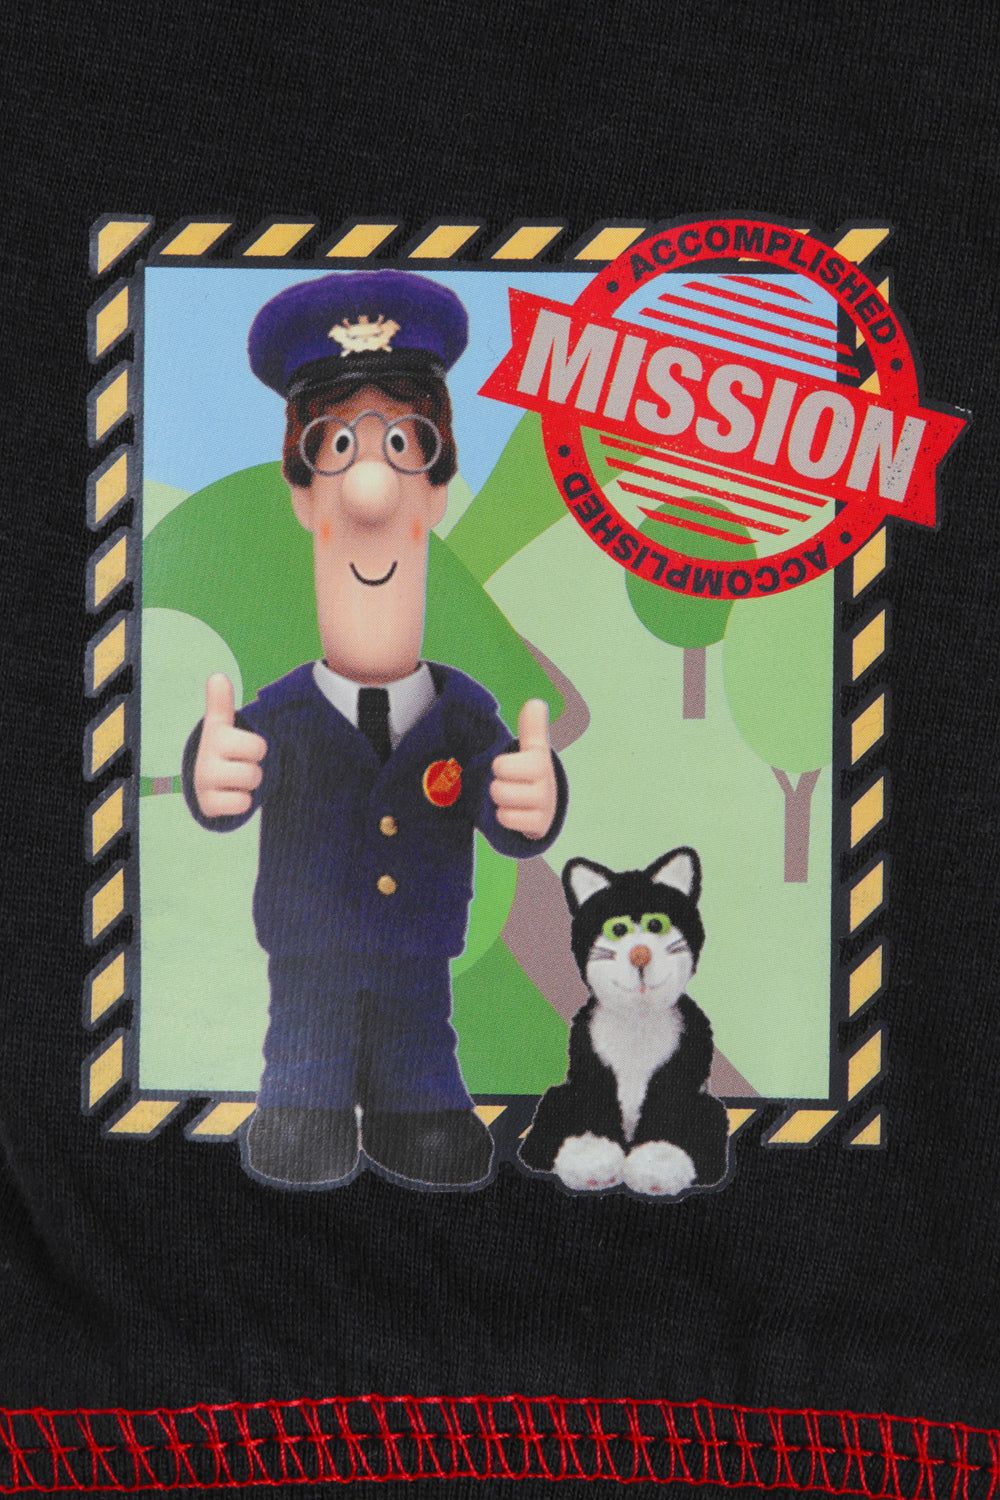 Postman Pat Mission Accomplished  Long Pyjamas - Pyjamas.com